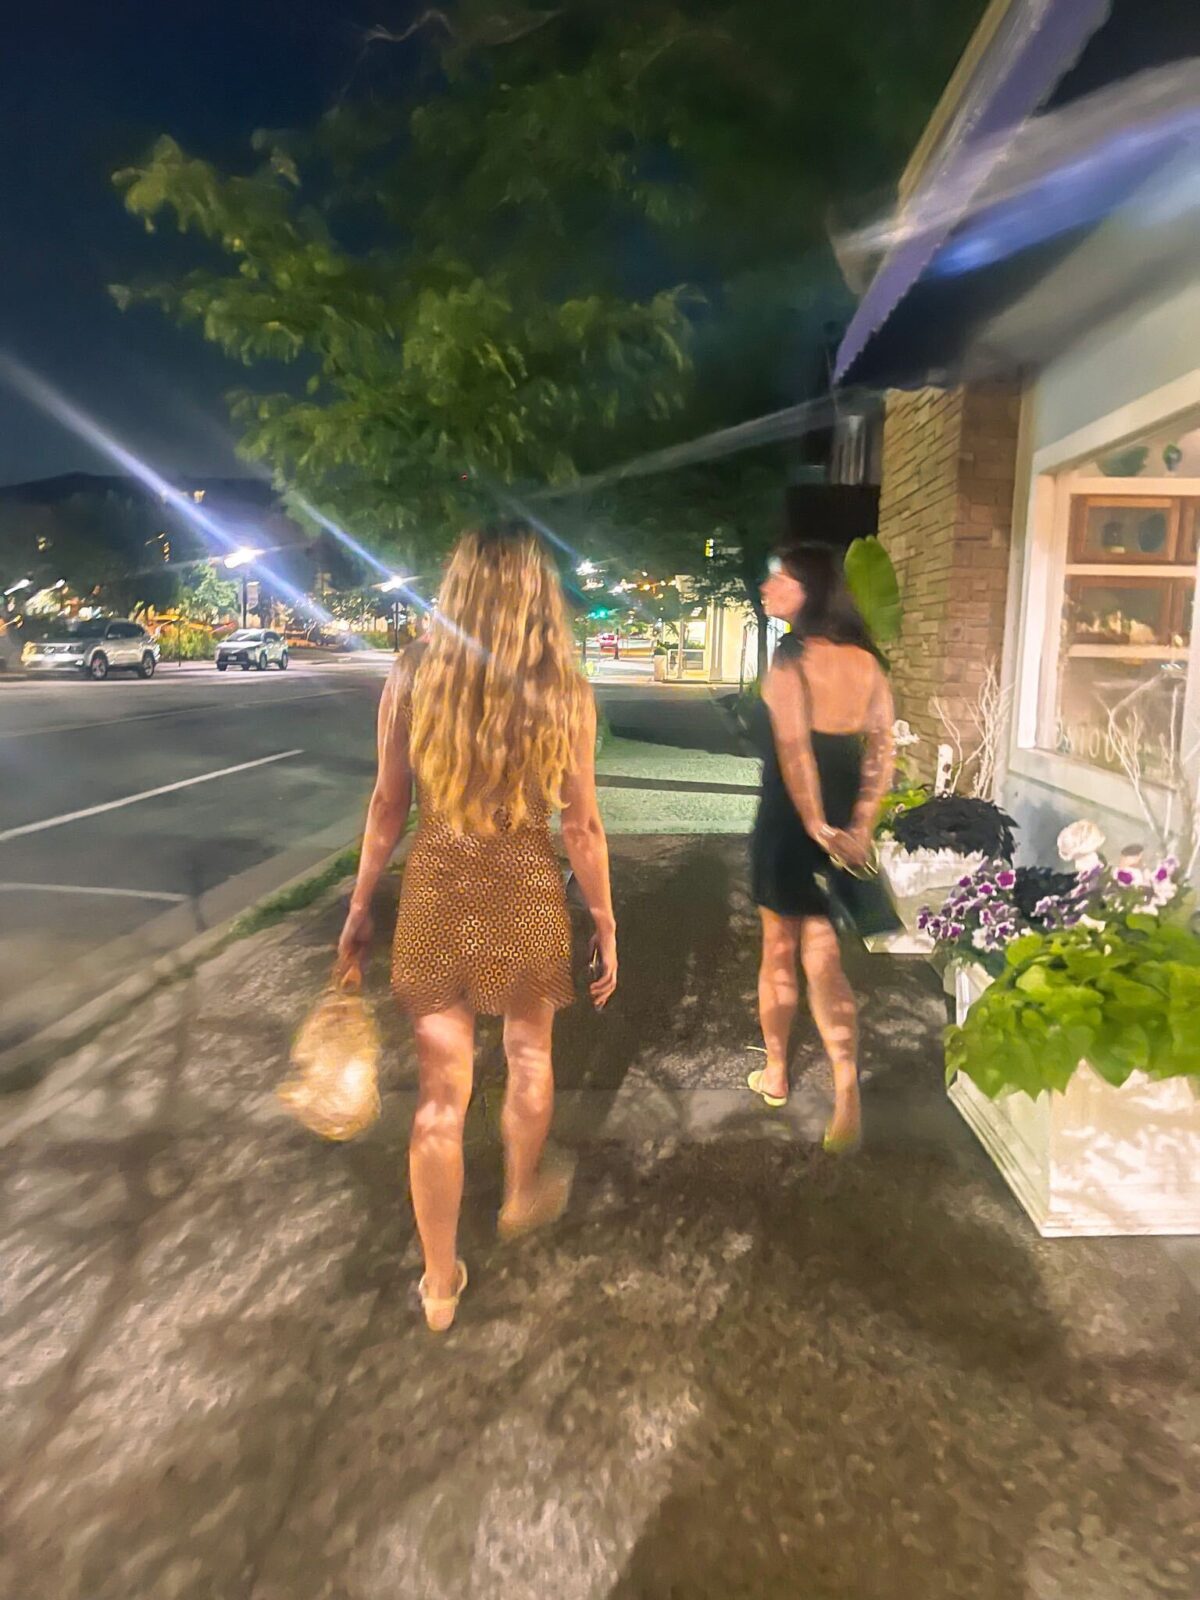 Two women wearing dresses shown walking down a city sidewalk at night